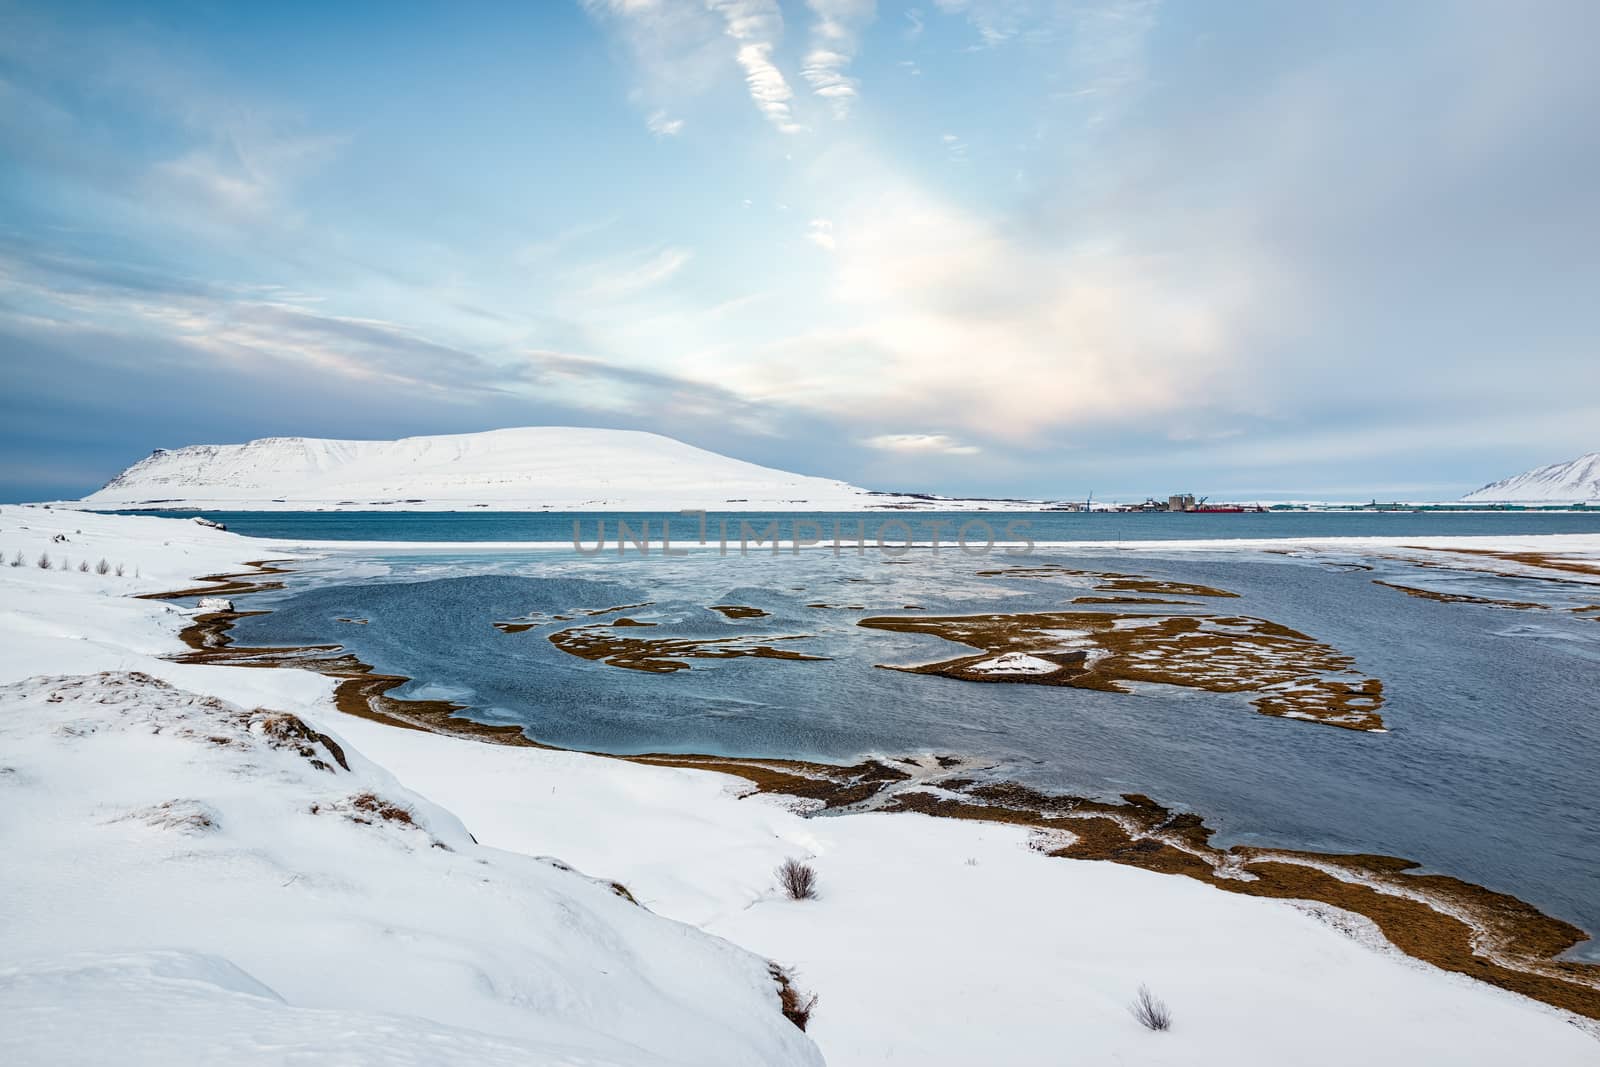 View of the Hvalfjordur in winter, Iceland by LuigiMorbidelli